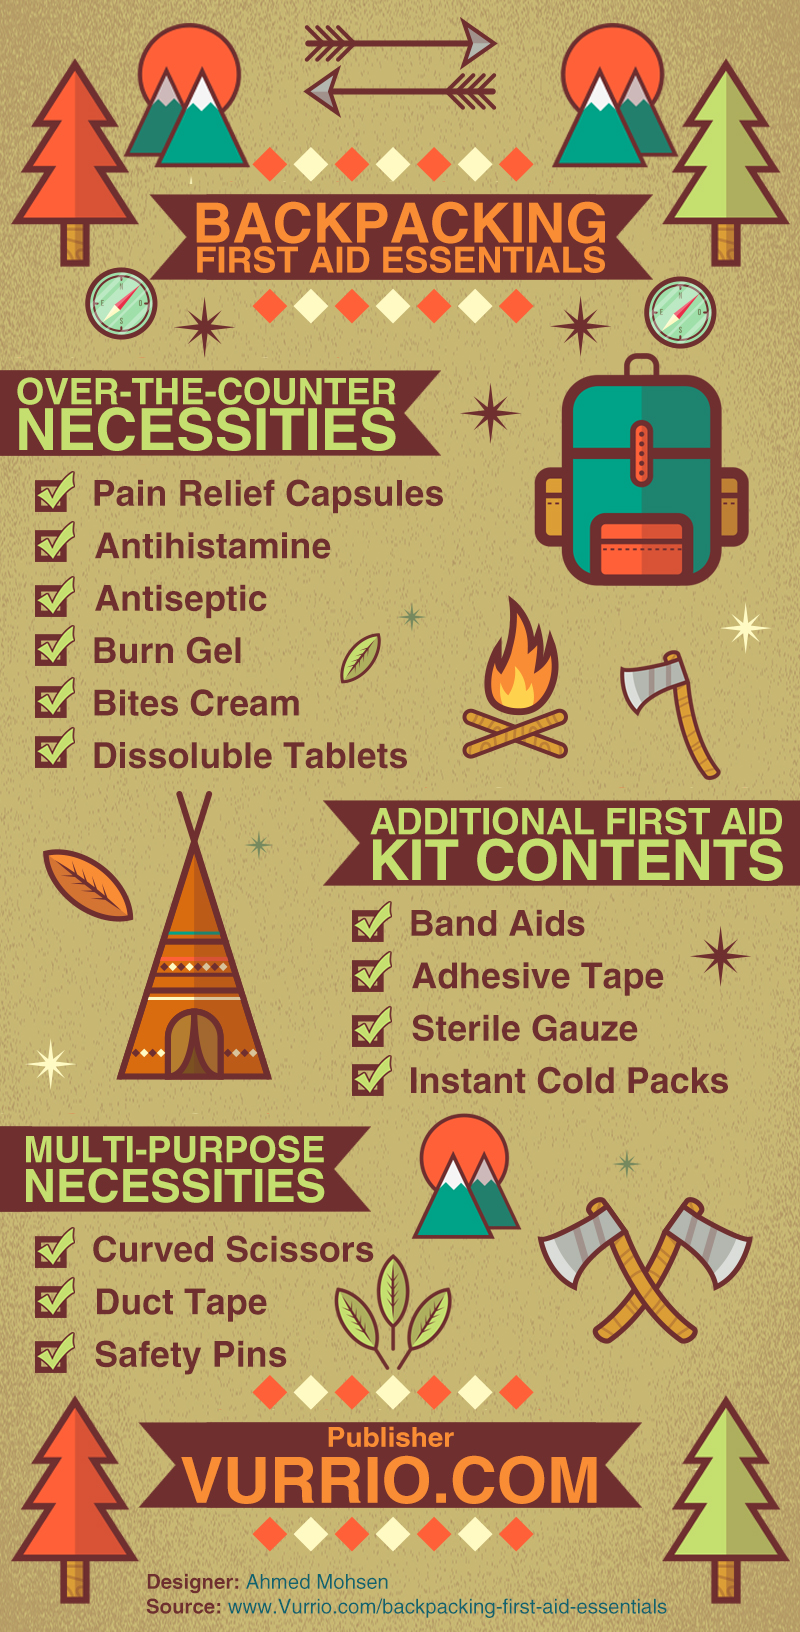 Backpacking First Aid Essentials by Vurrio.com